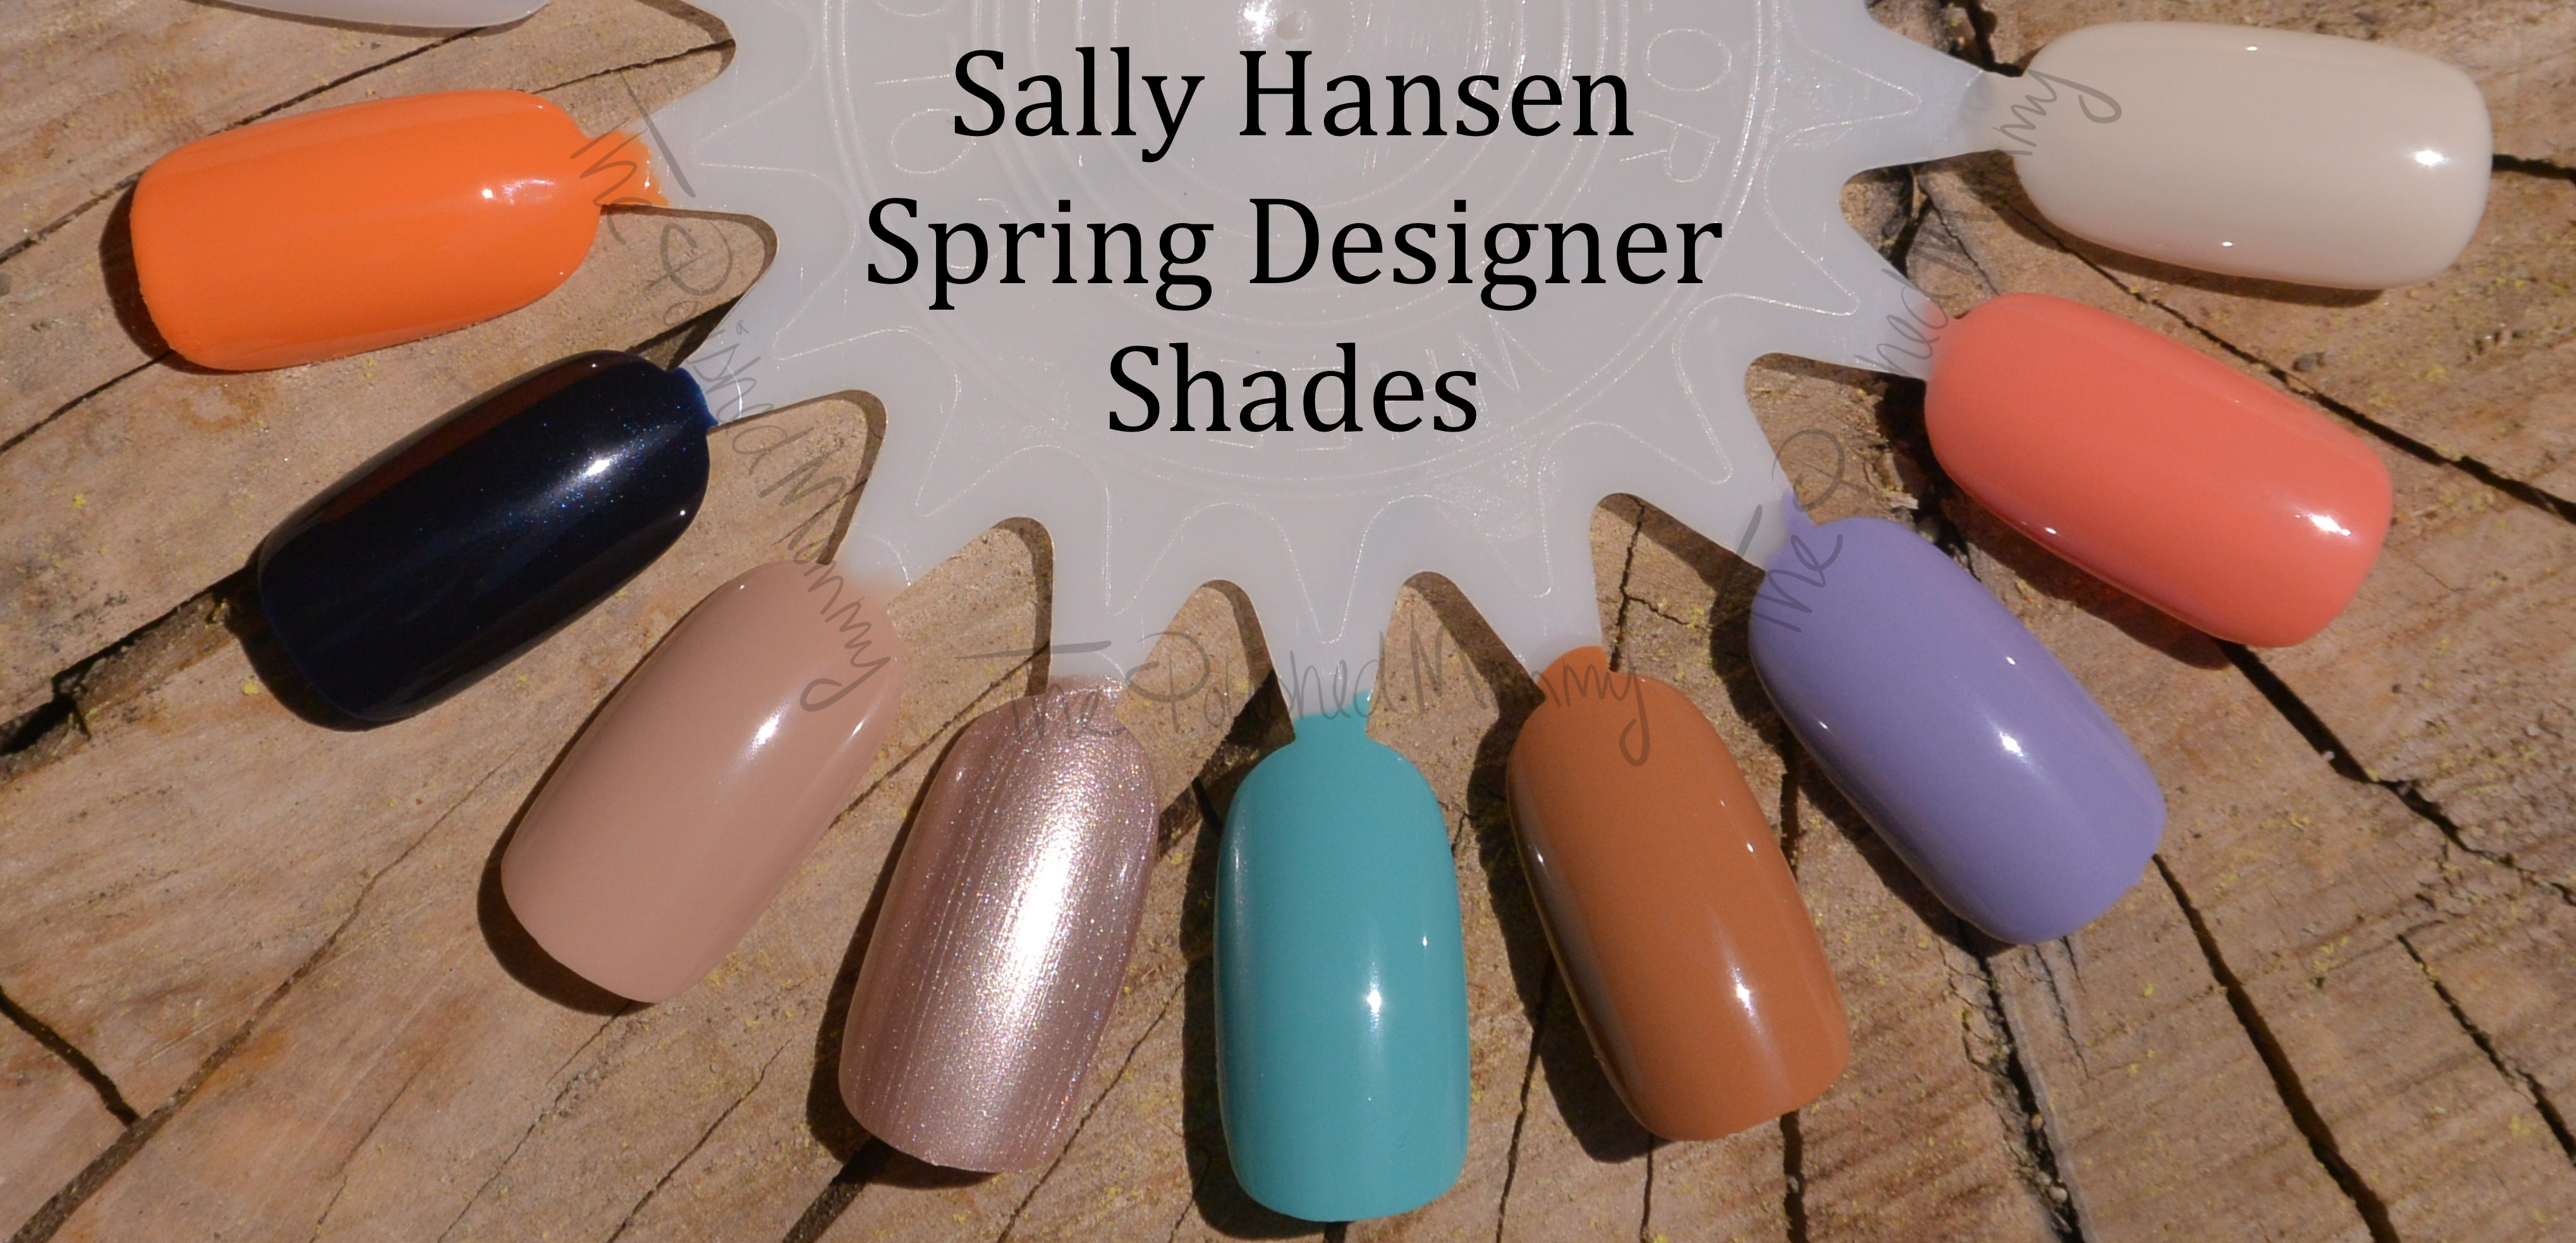 Sally Hansen Spring Designer Shades-003